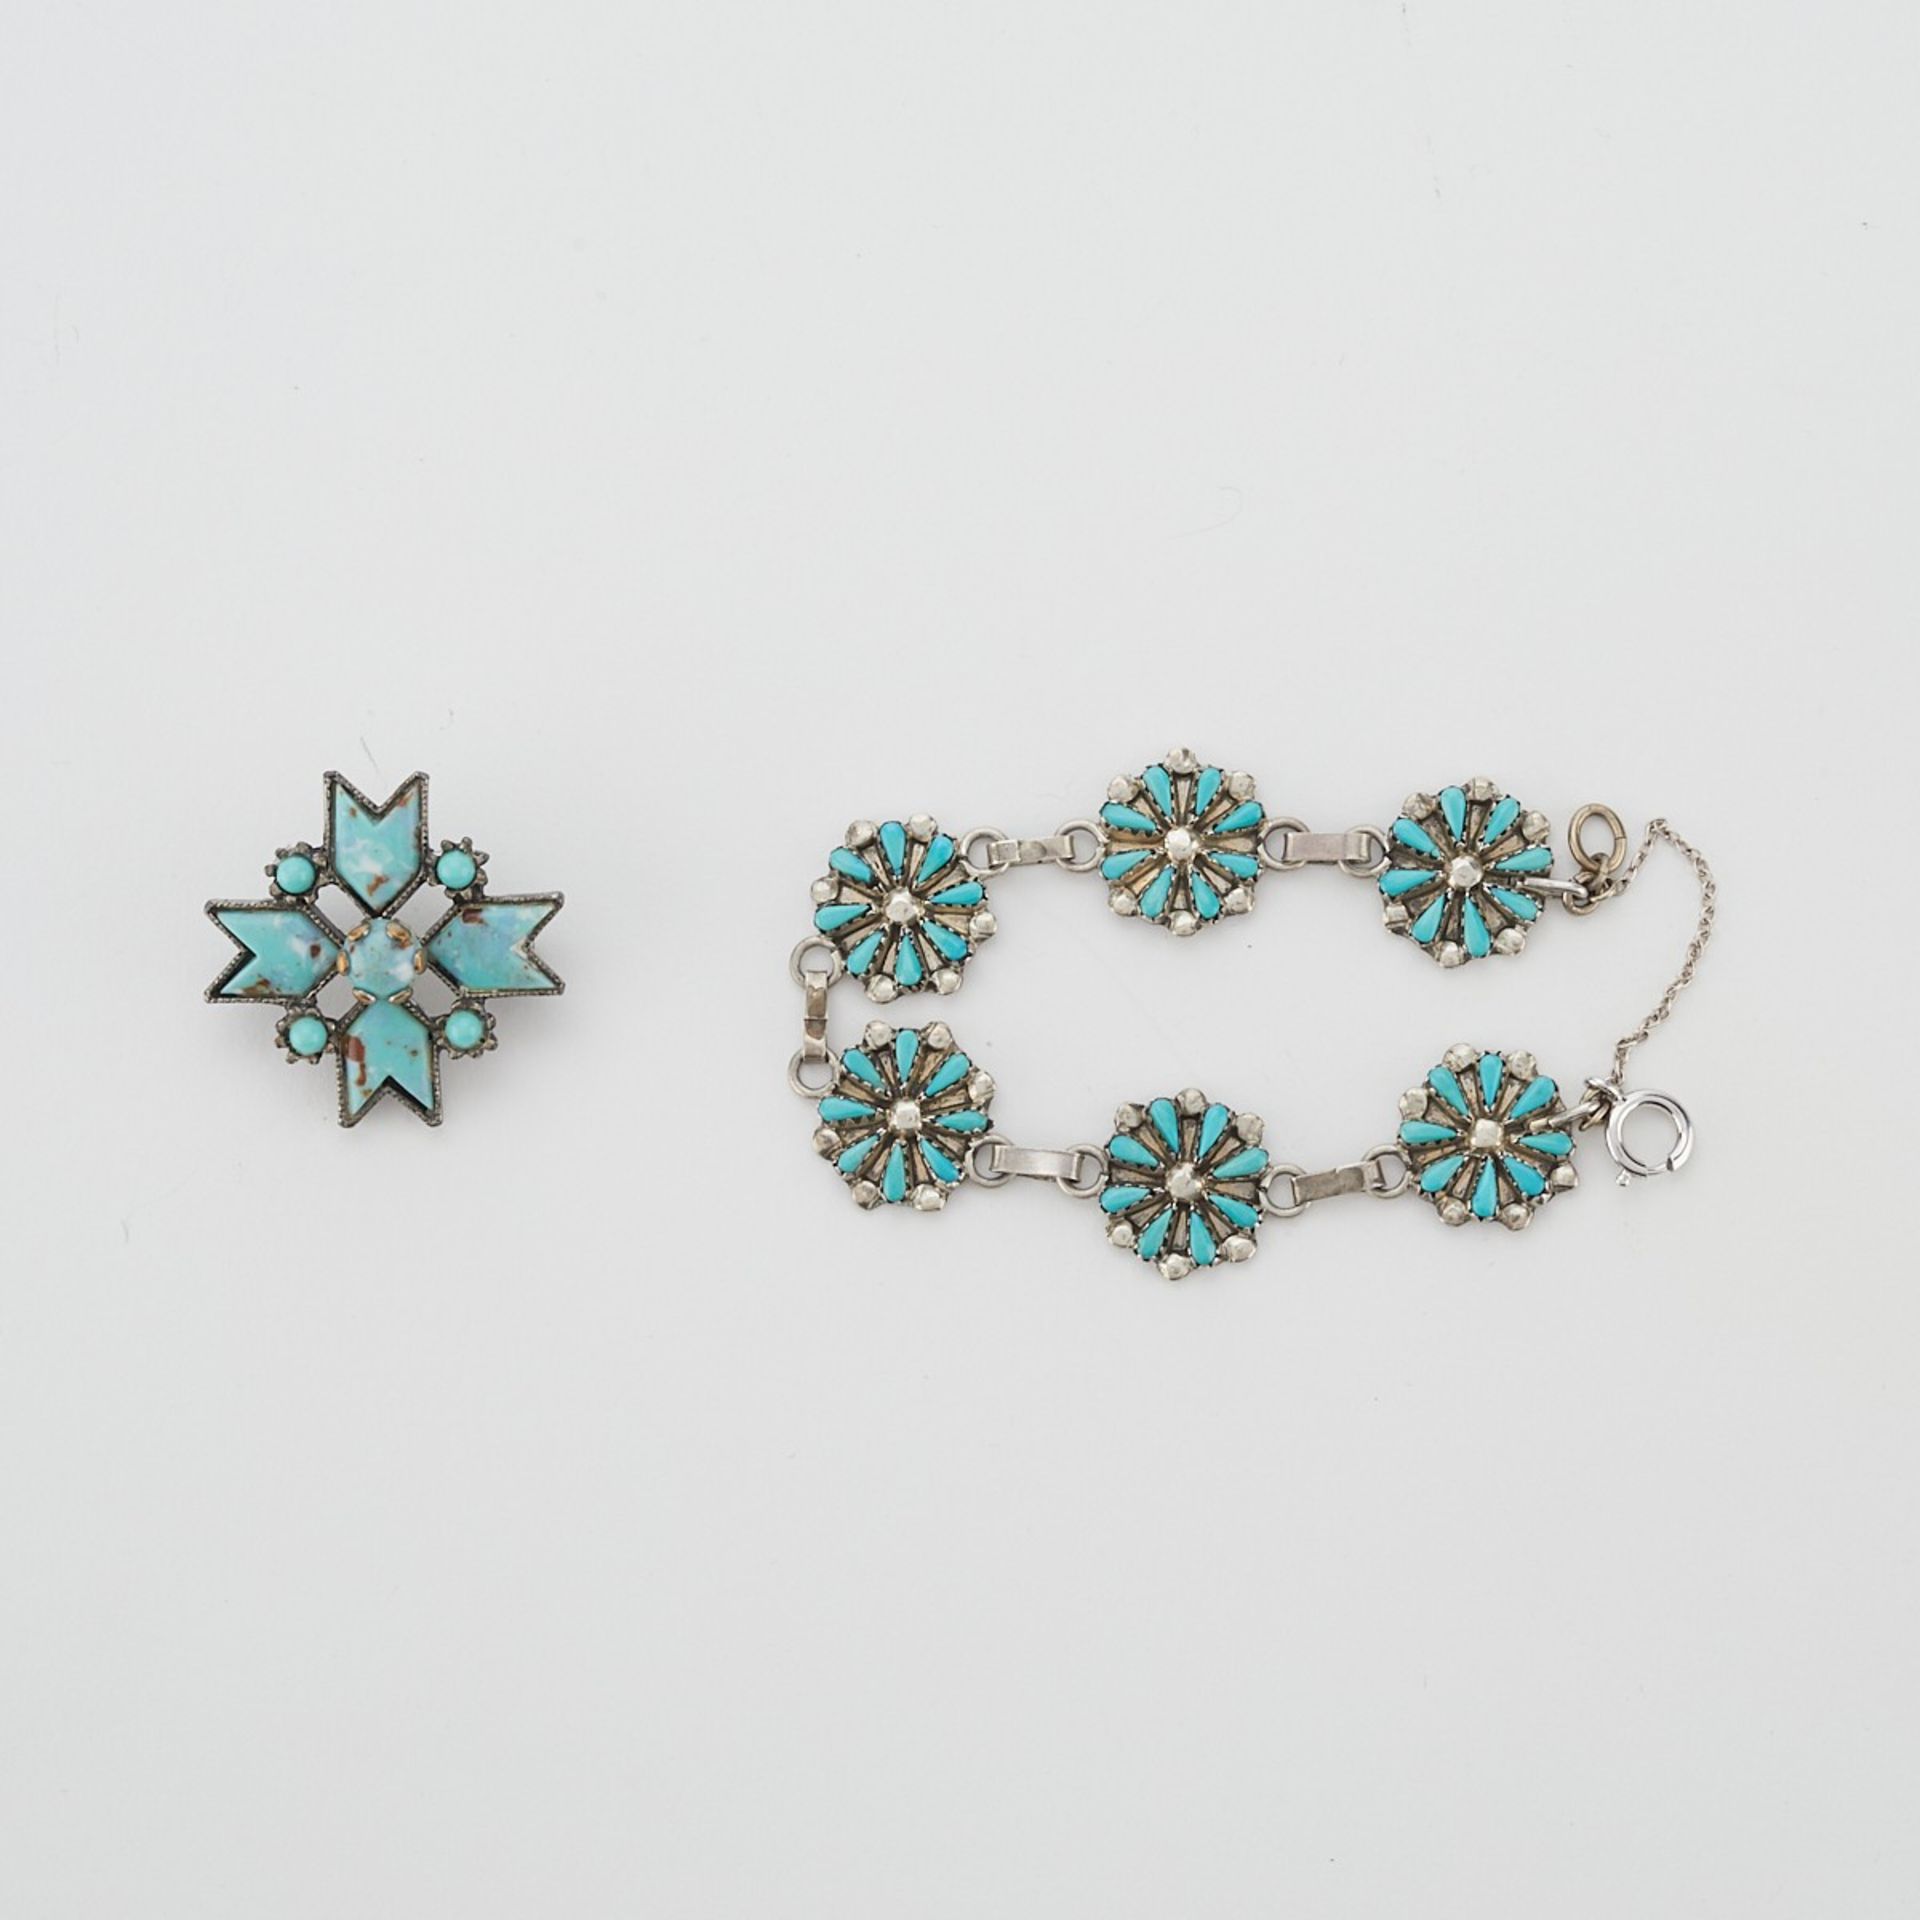 6 Southwest Turquoise Jewelry Rings, Pin, Bracelet - Image 3 of 16